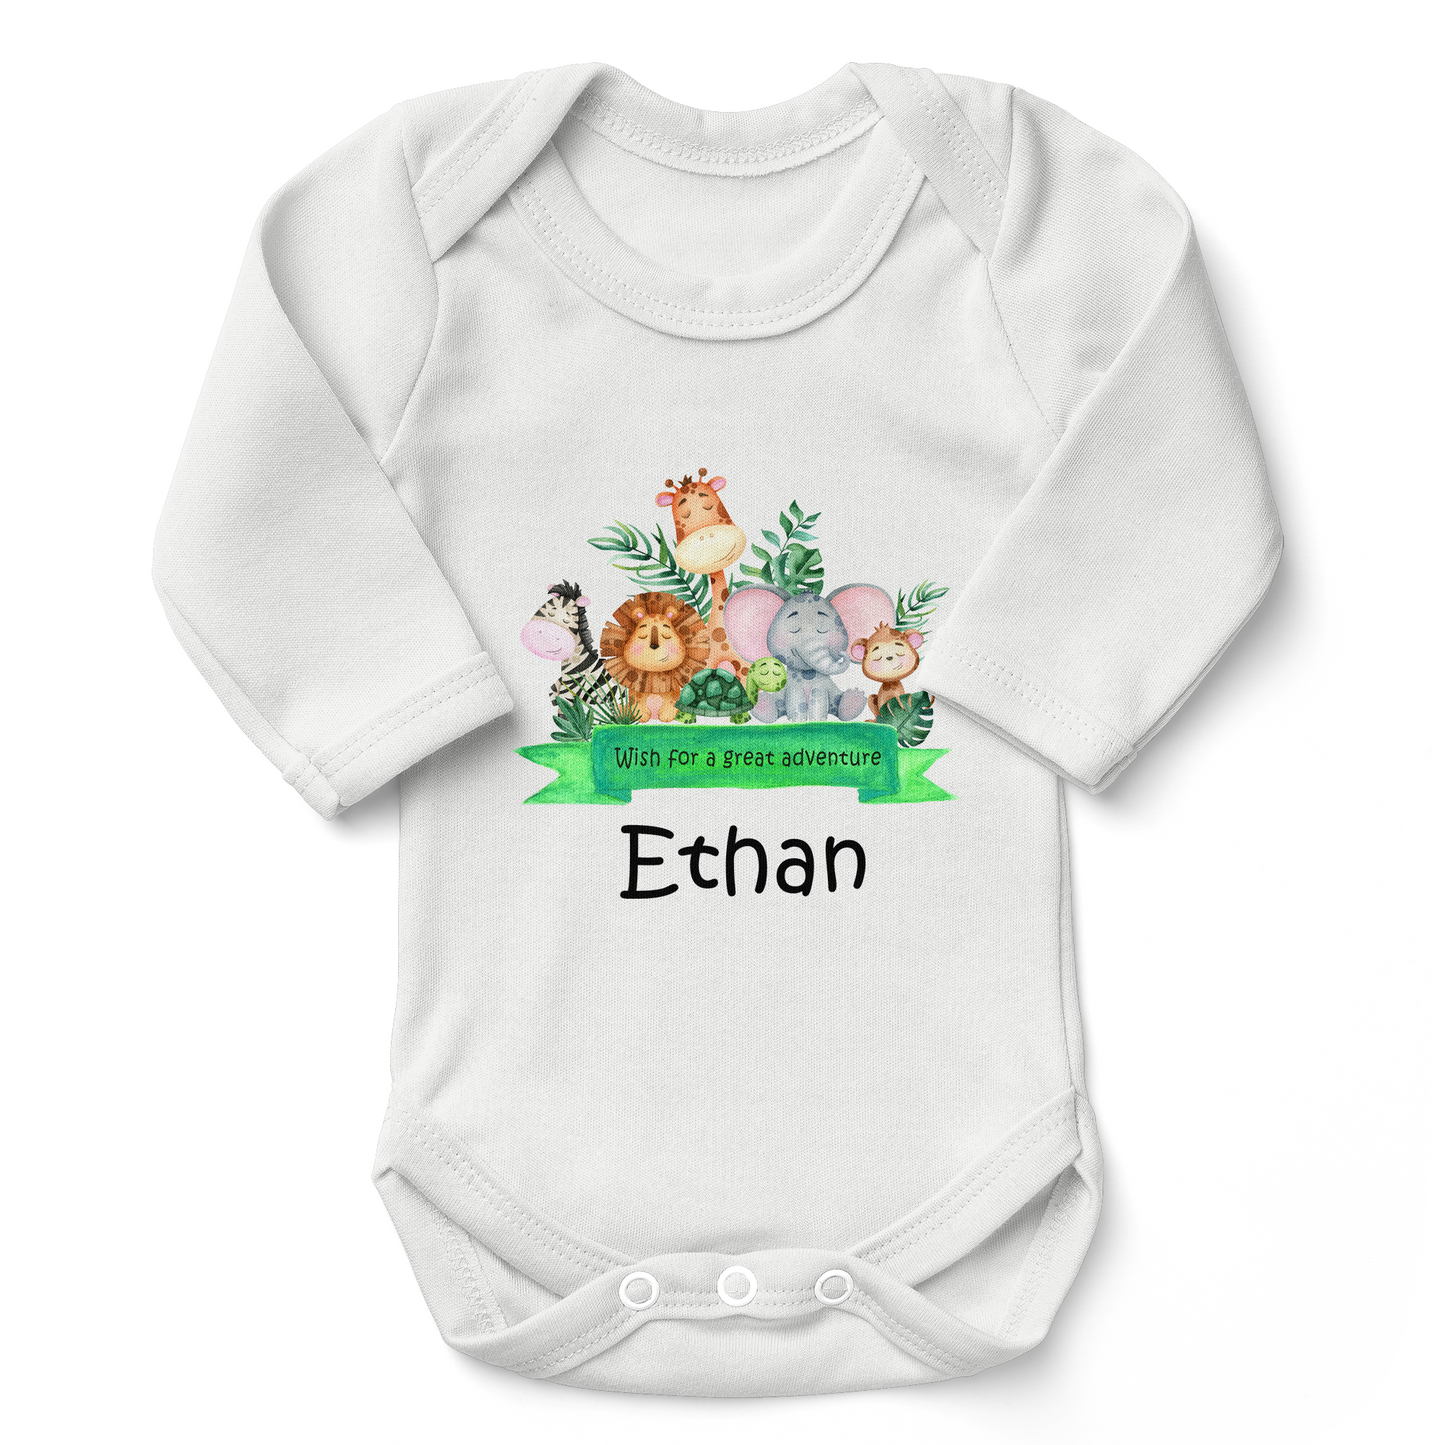 Endanzoo Organic Newborn Coming Home Outfit Set - Safari Hugs